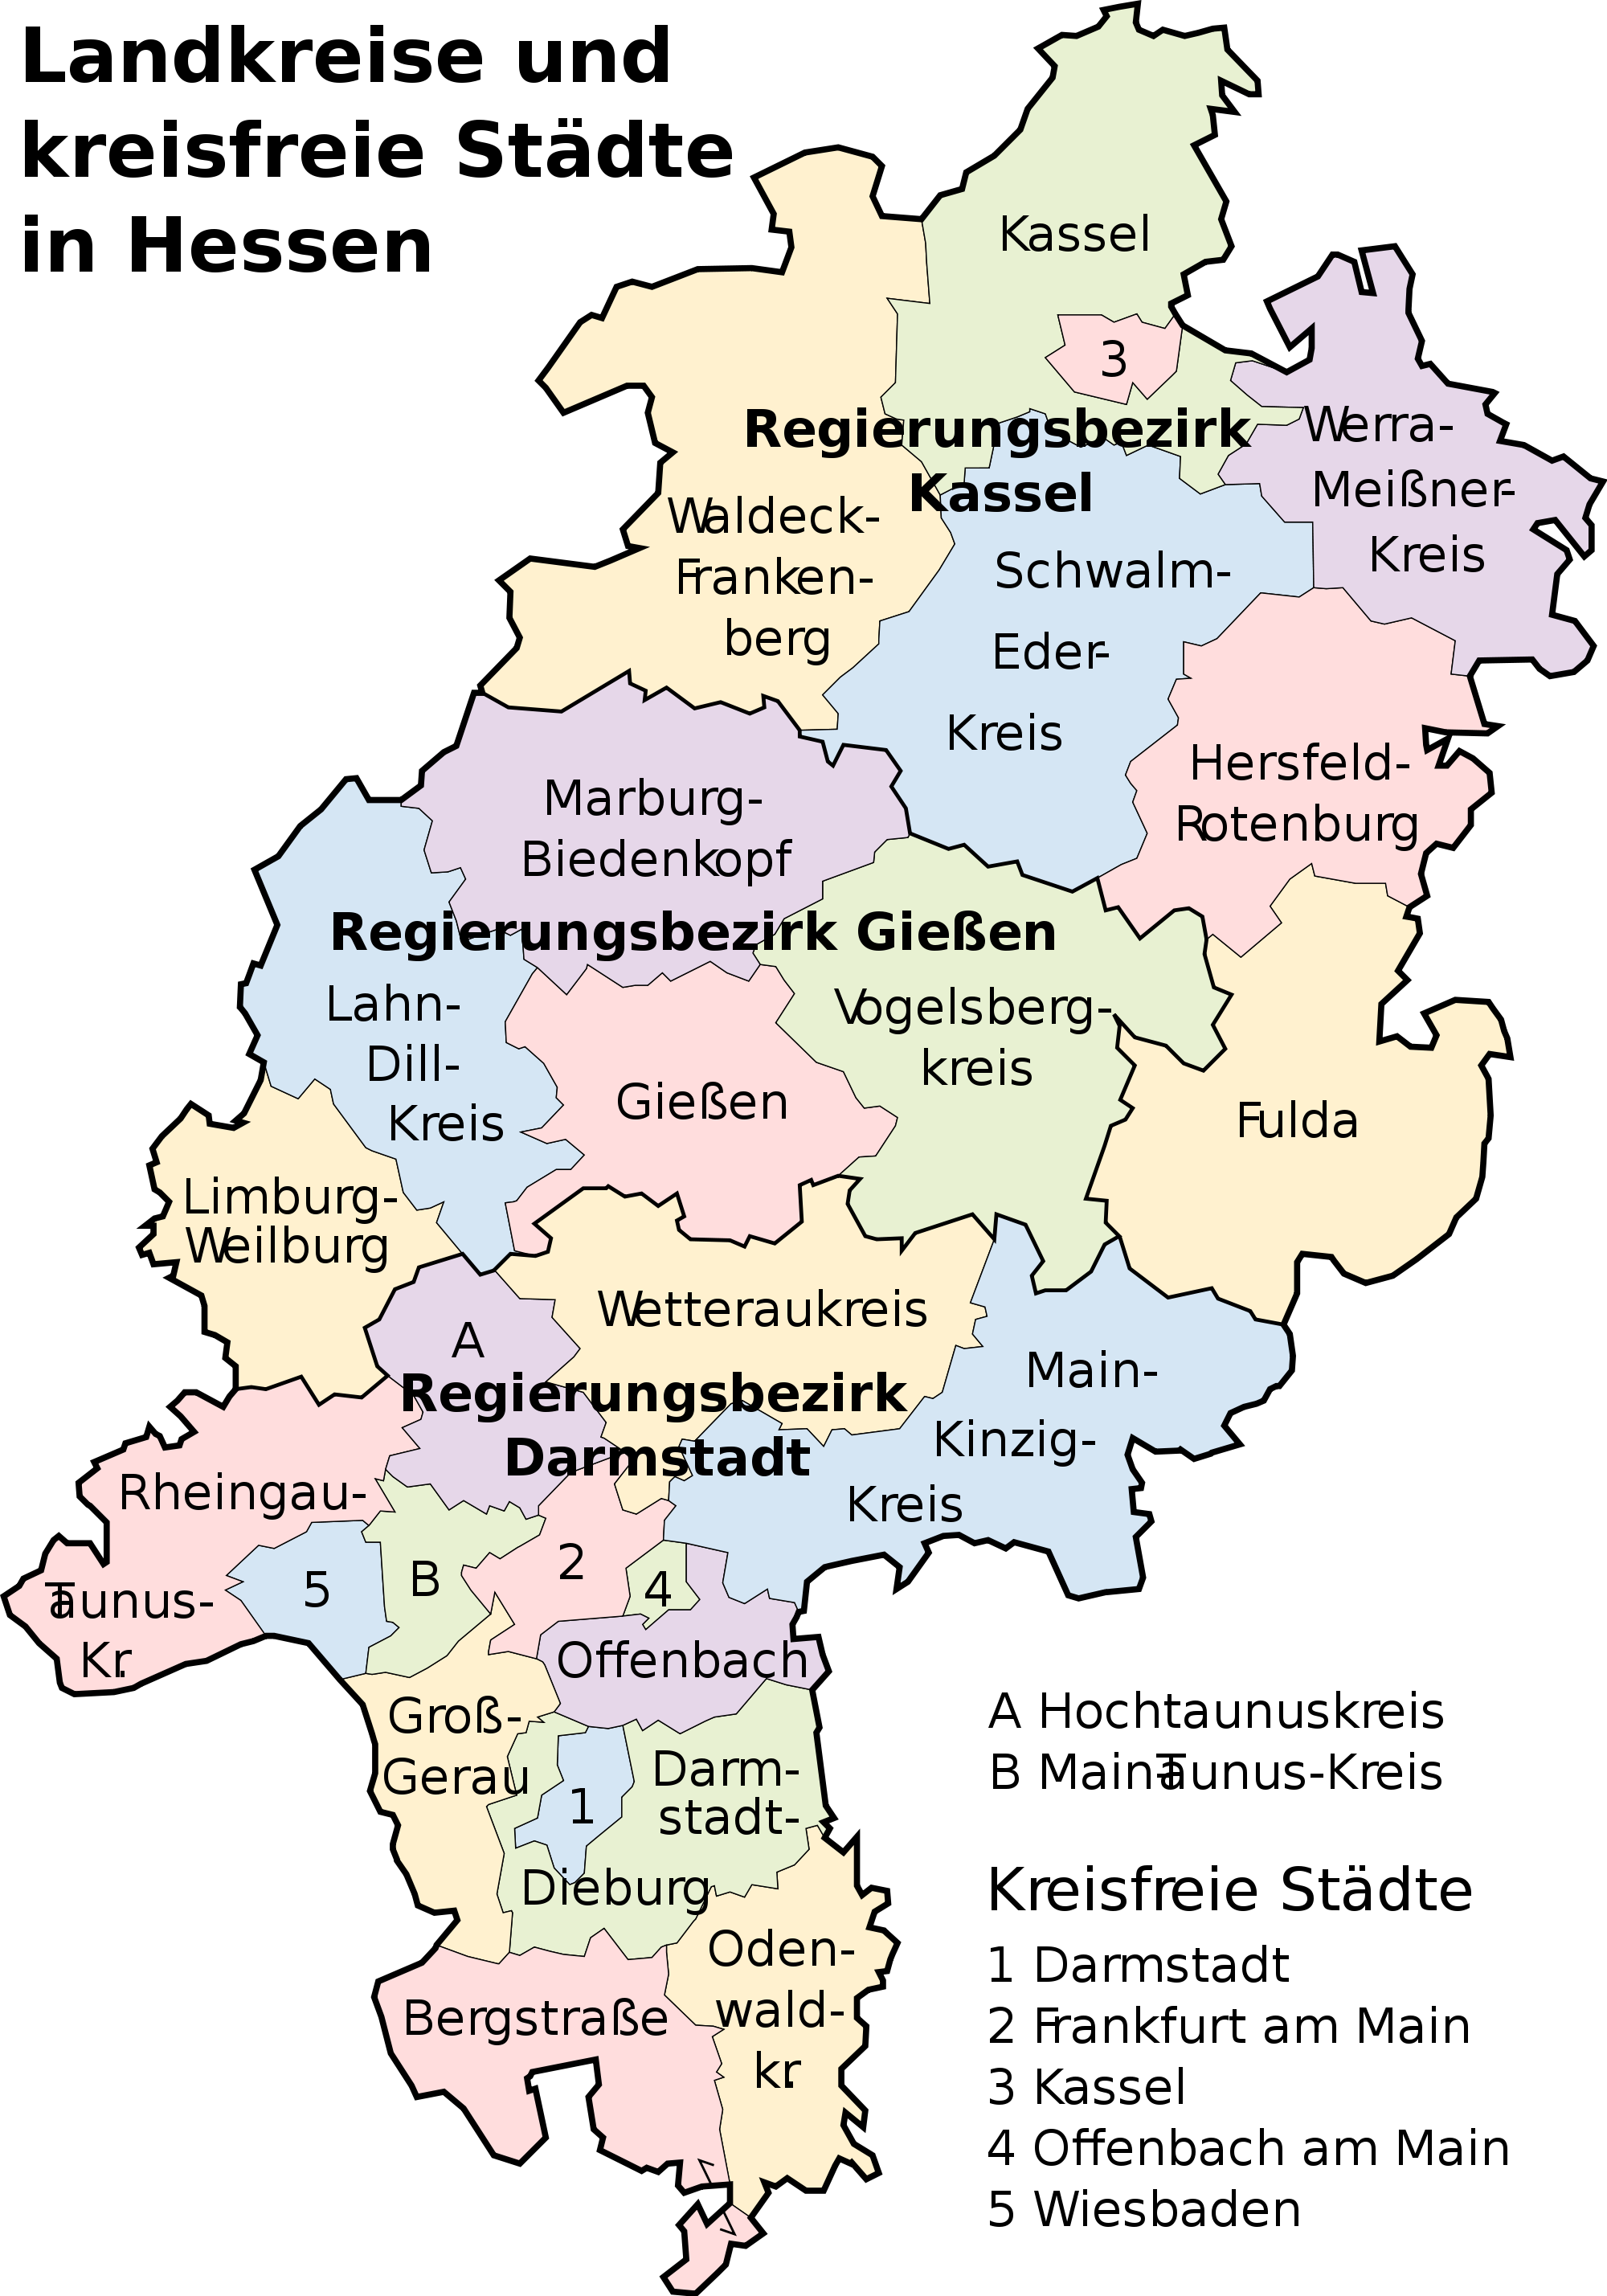 Corona Hessen Karte Landkreise / KIT - Das KIT - Medien - News - News